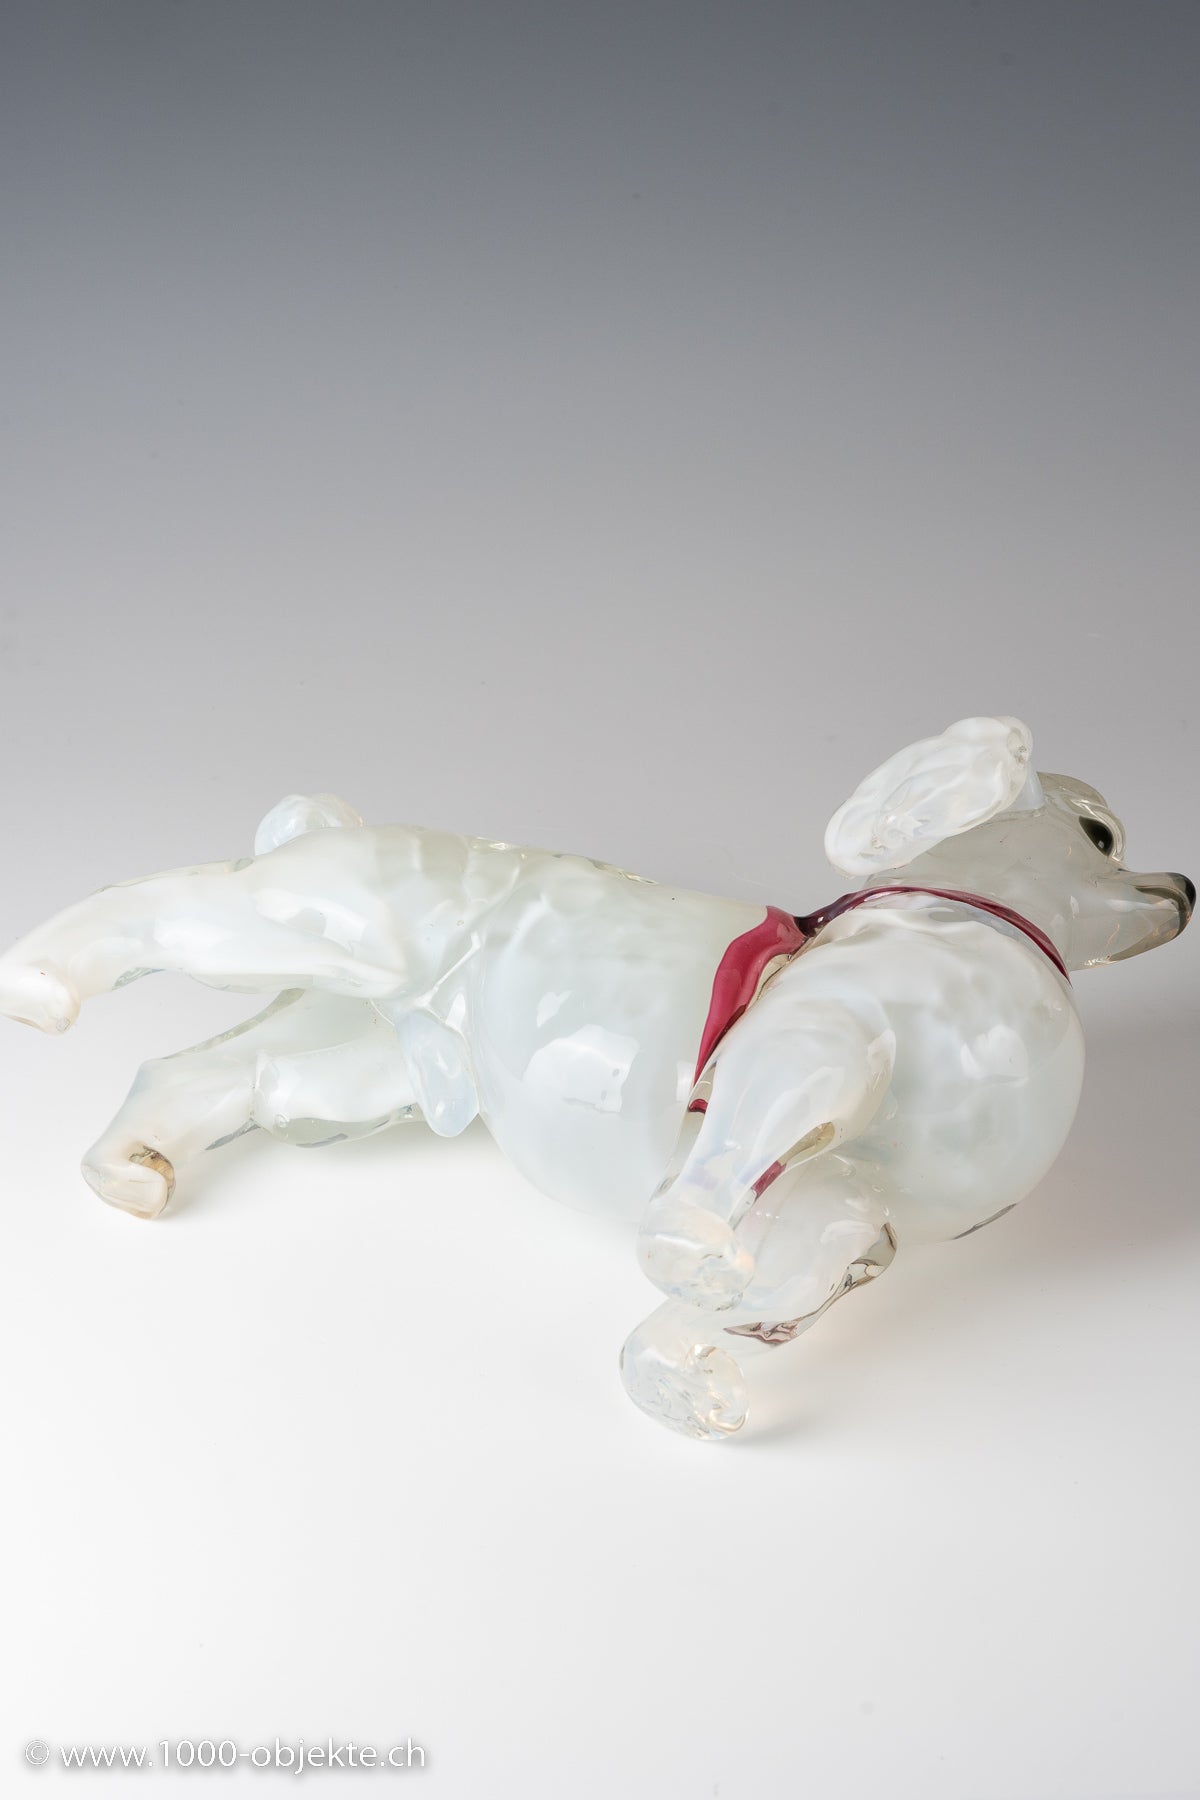 Ermano Nason for Cenedese.  Poodle  figurine sculptur 1963-72.